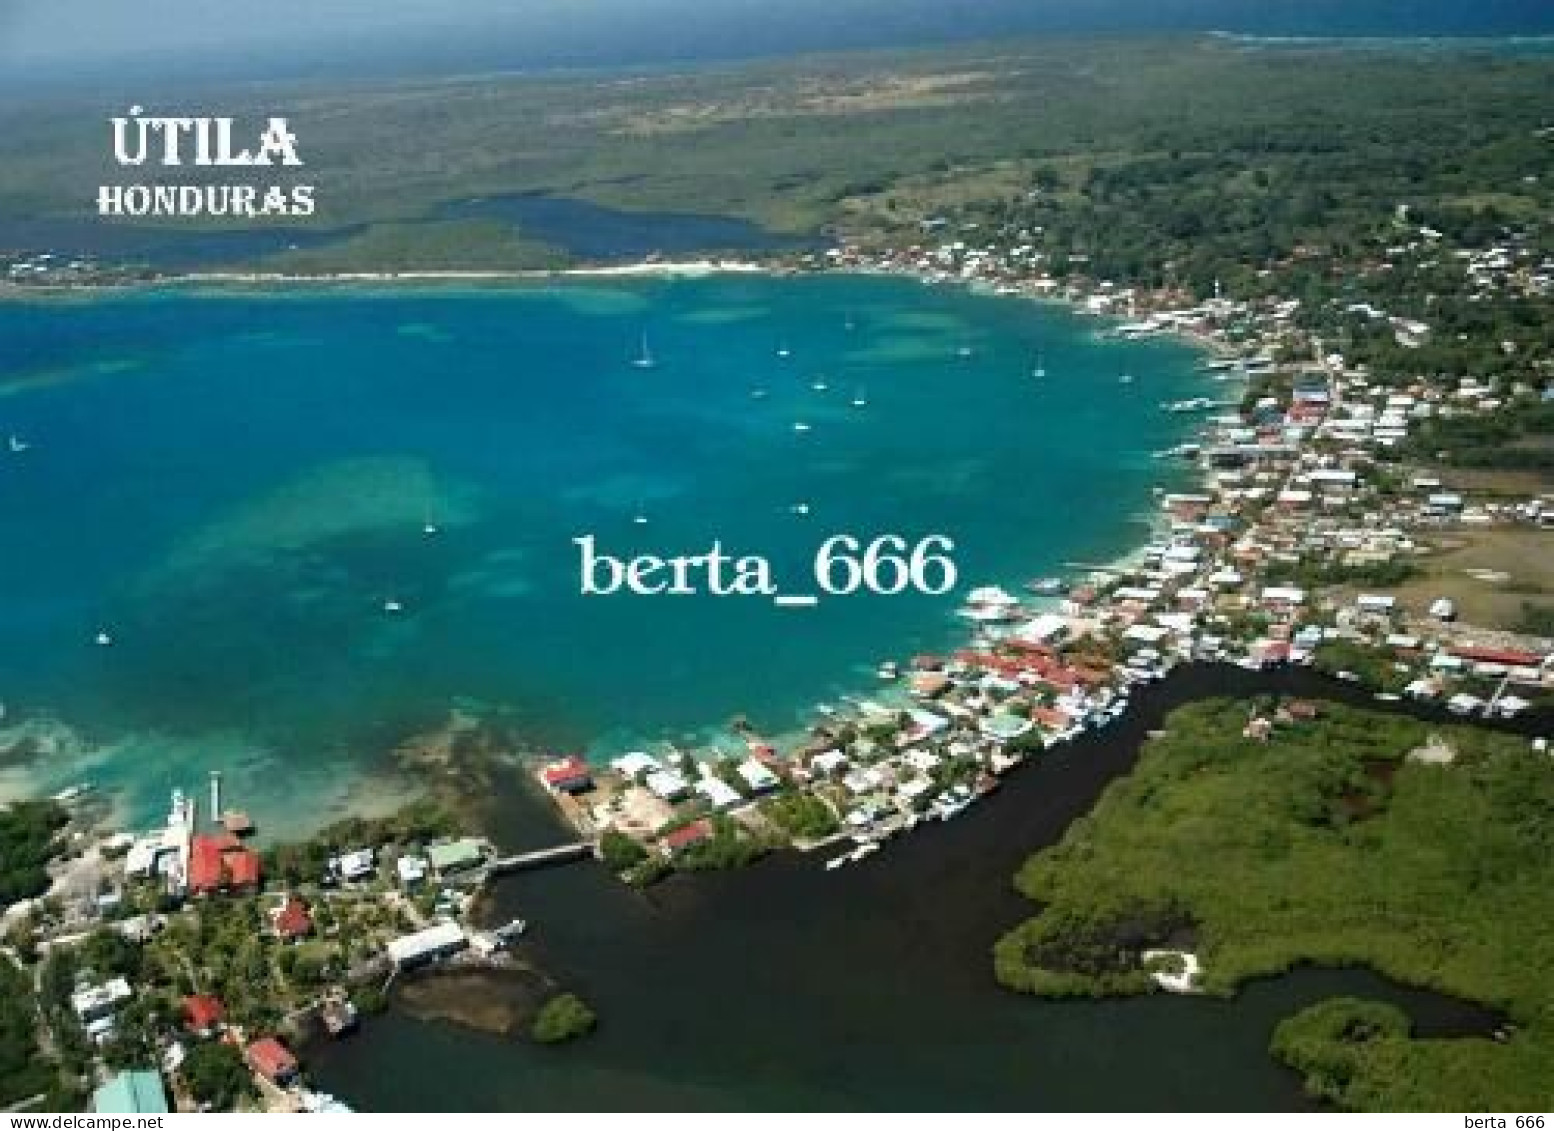 Honduras Utila Aerial View New Postcard - Honduras